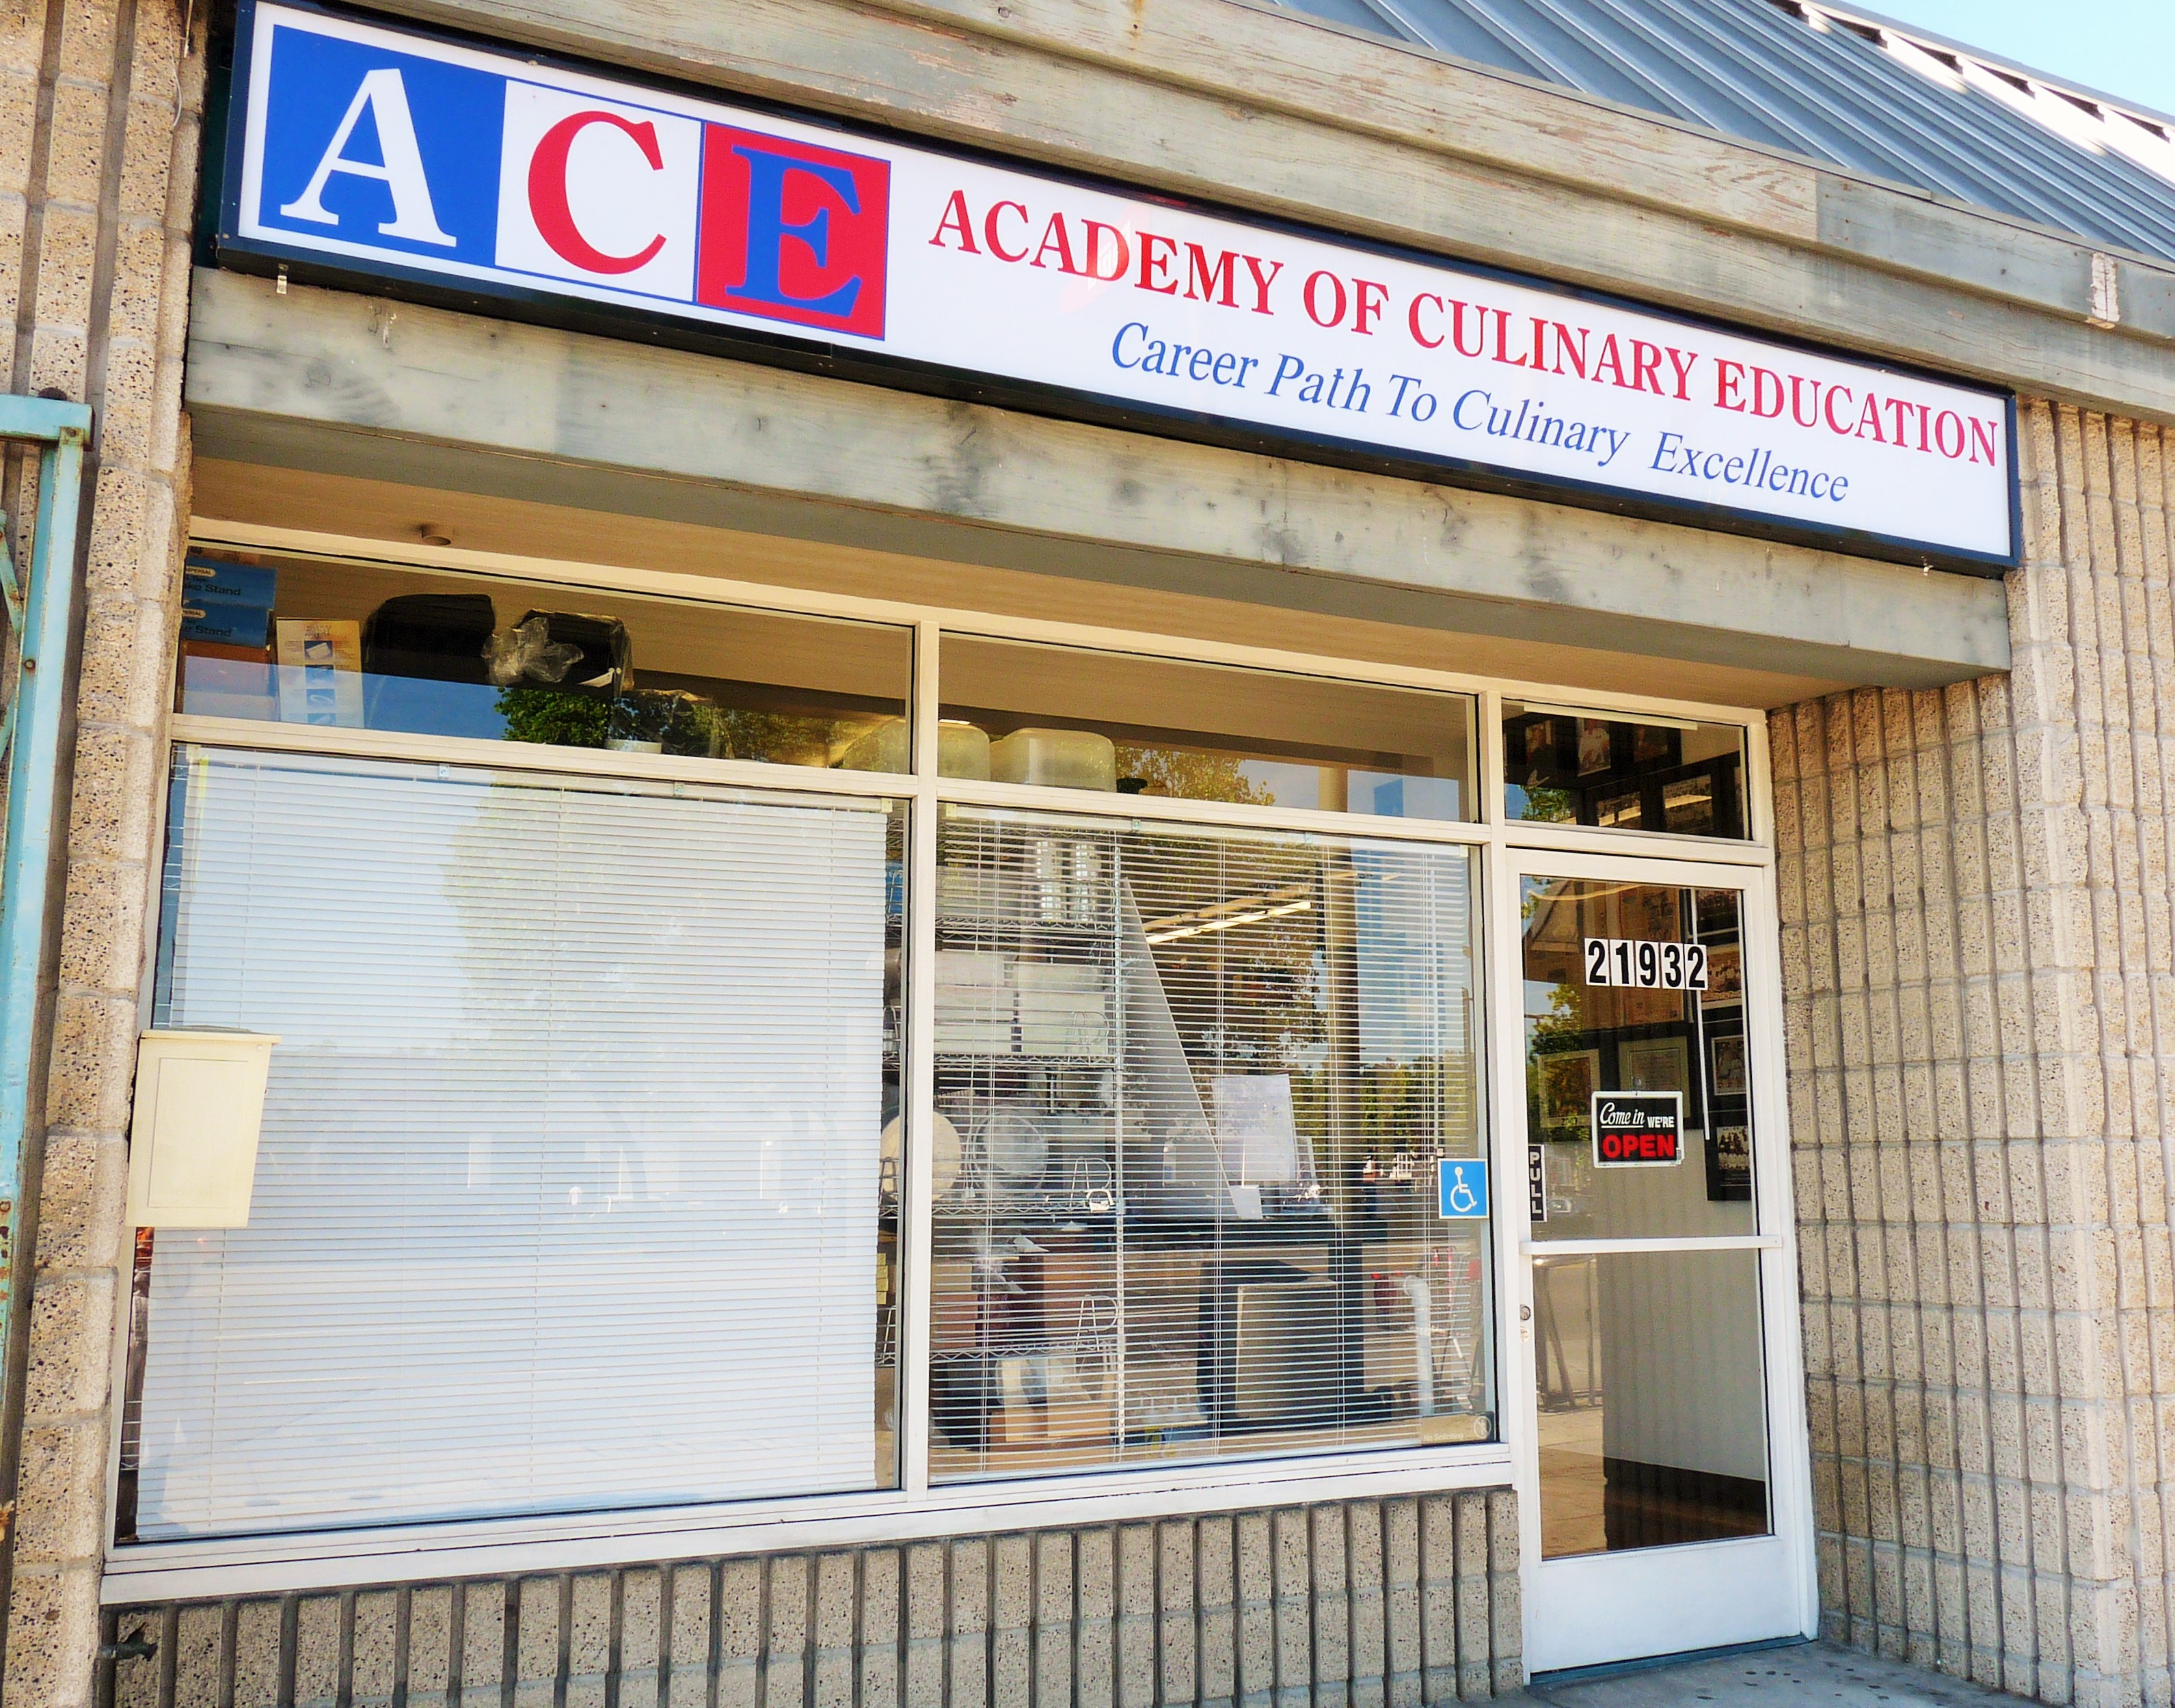 ACE: Academy of Culinary Education